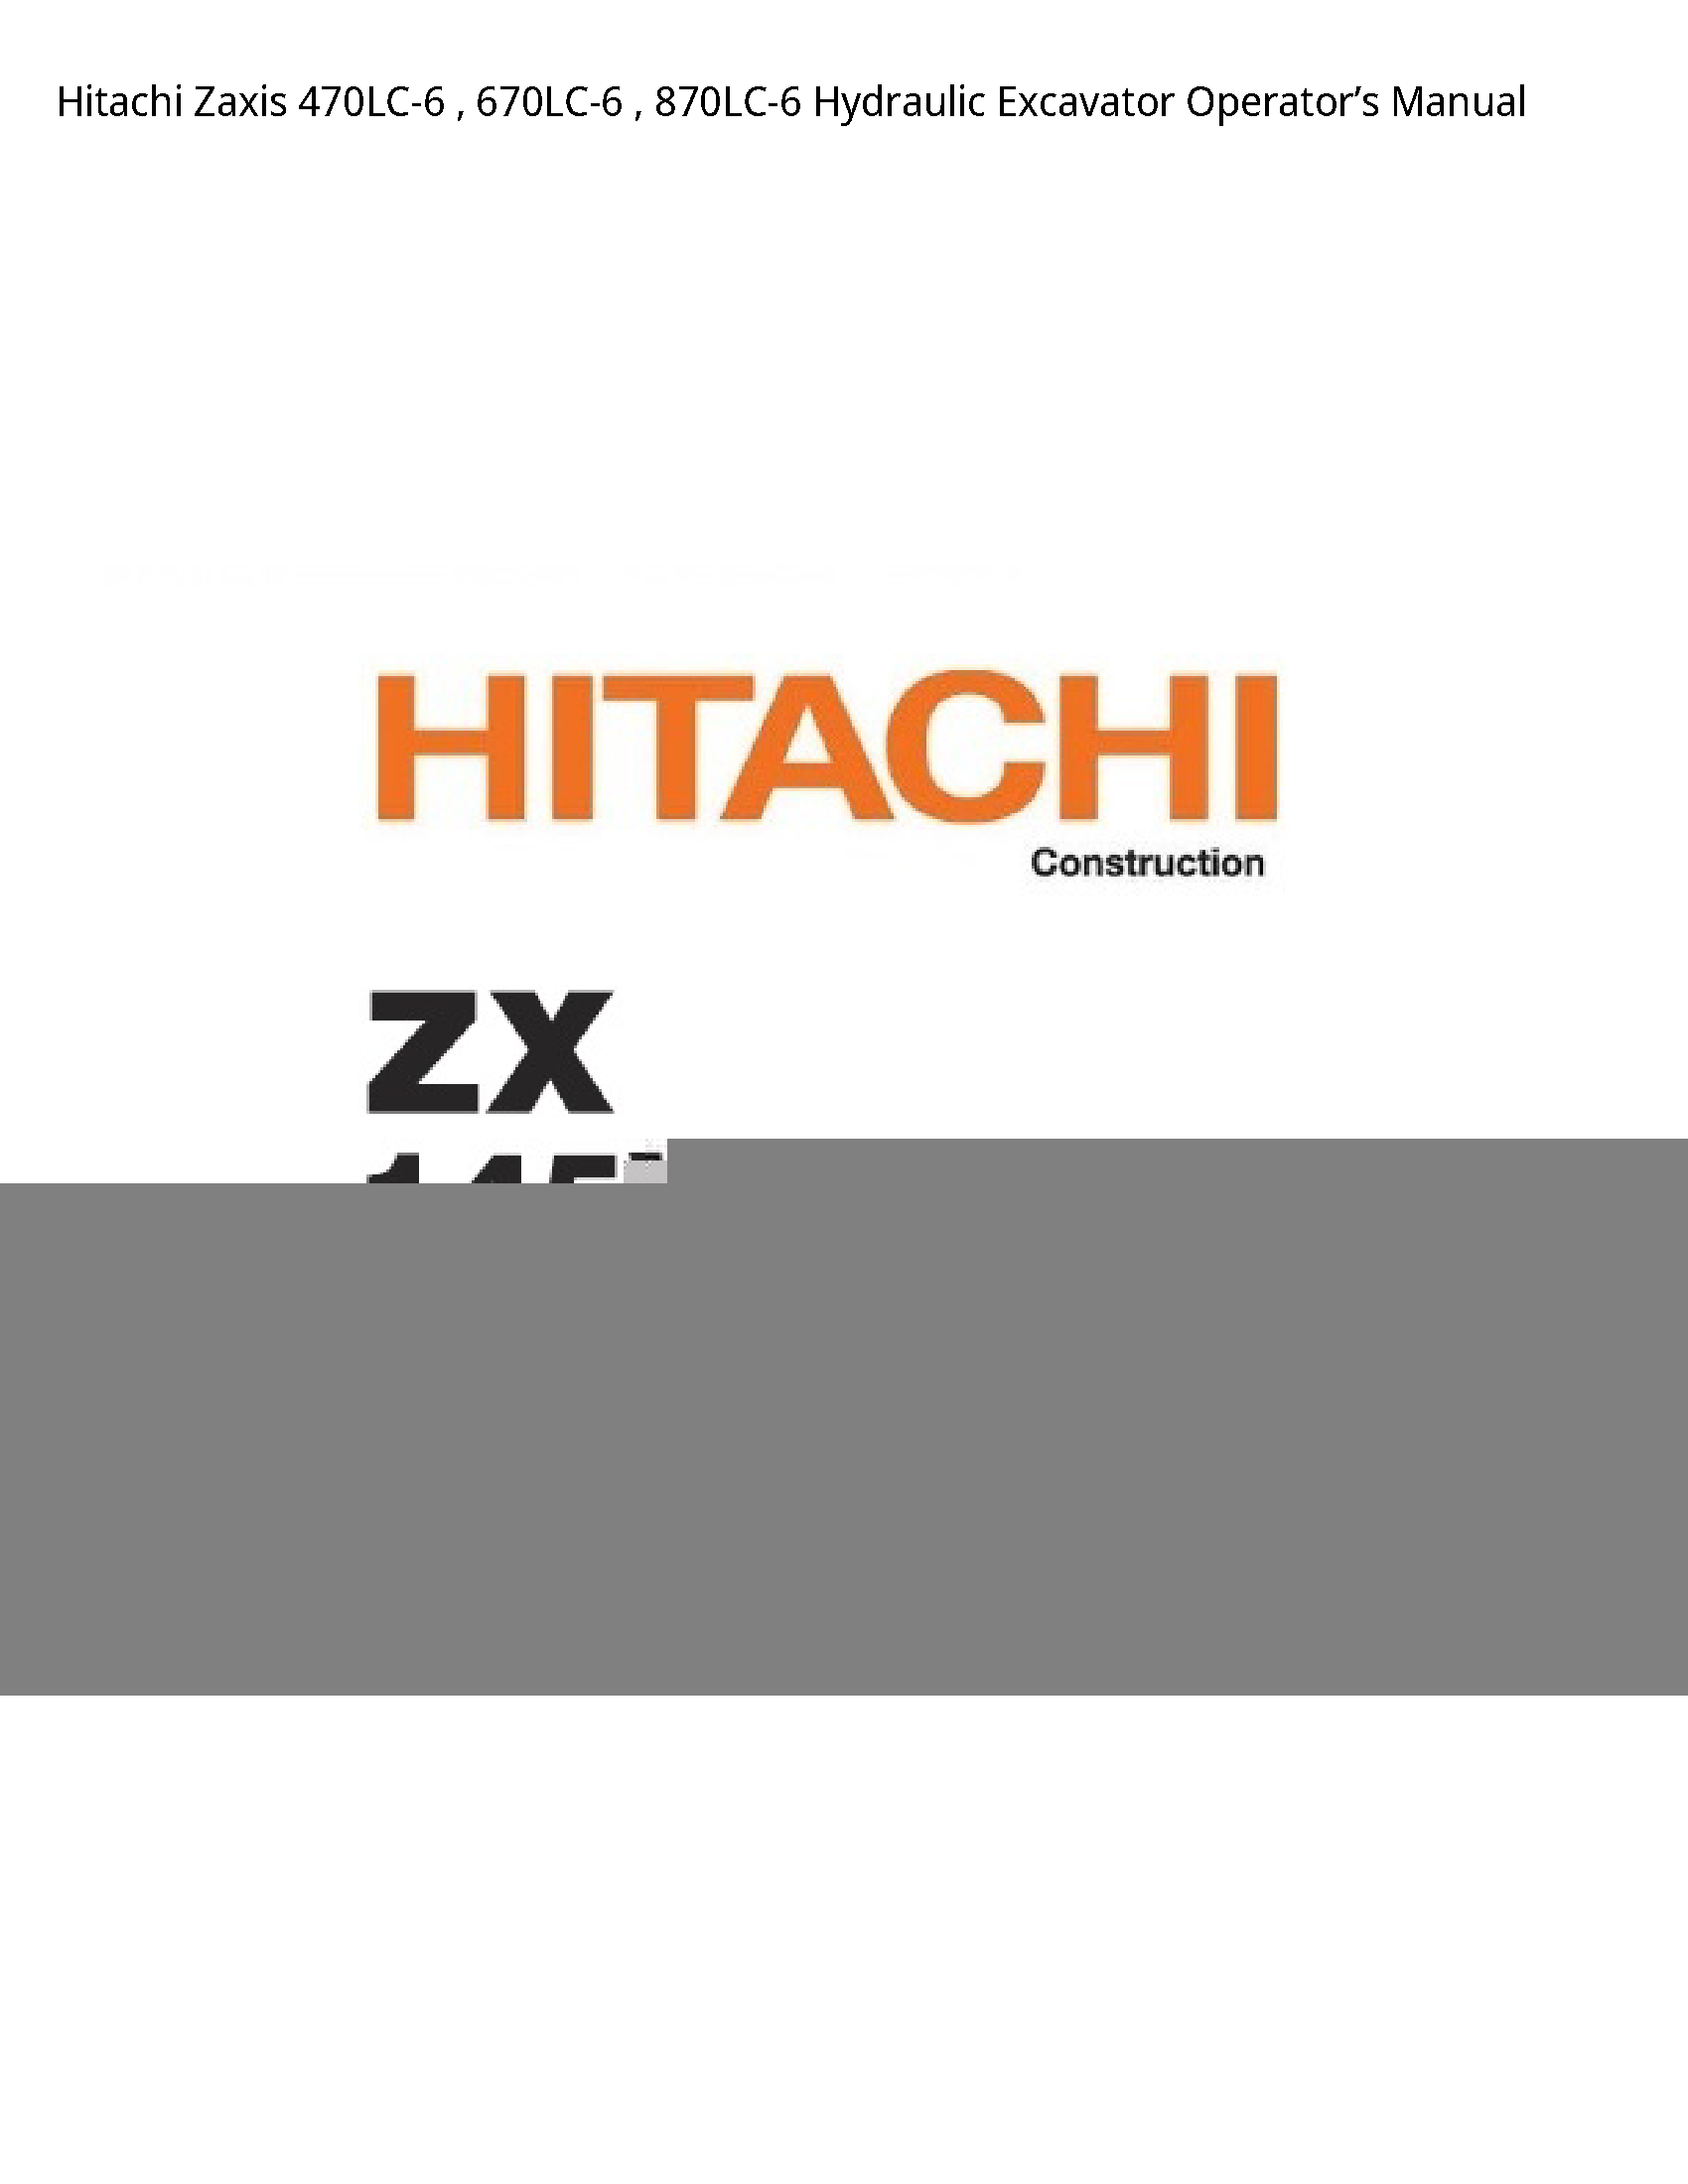 Hitachi 470LC-6 Zaxis Hydraulic Excavator Operator’s manual